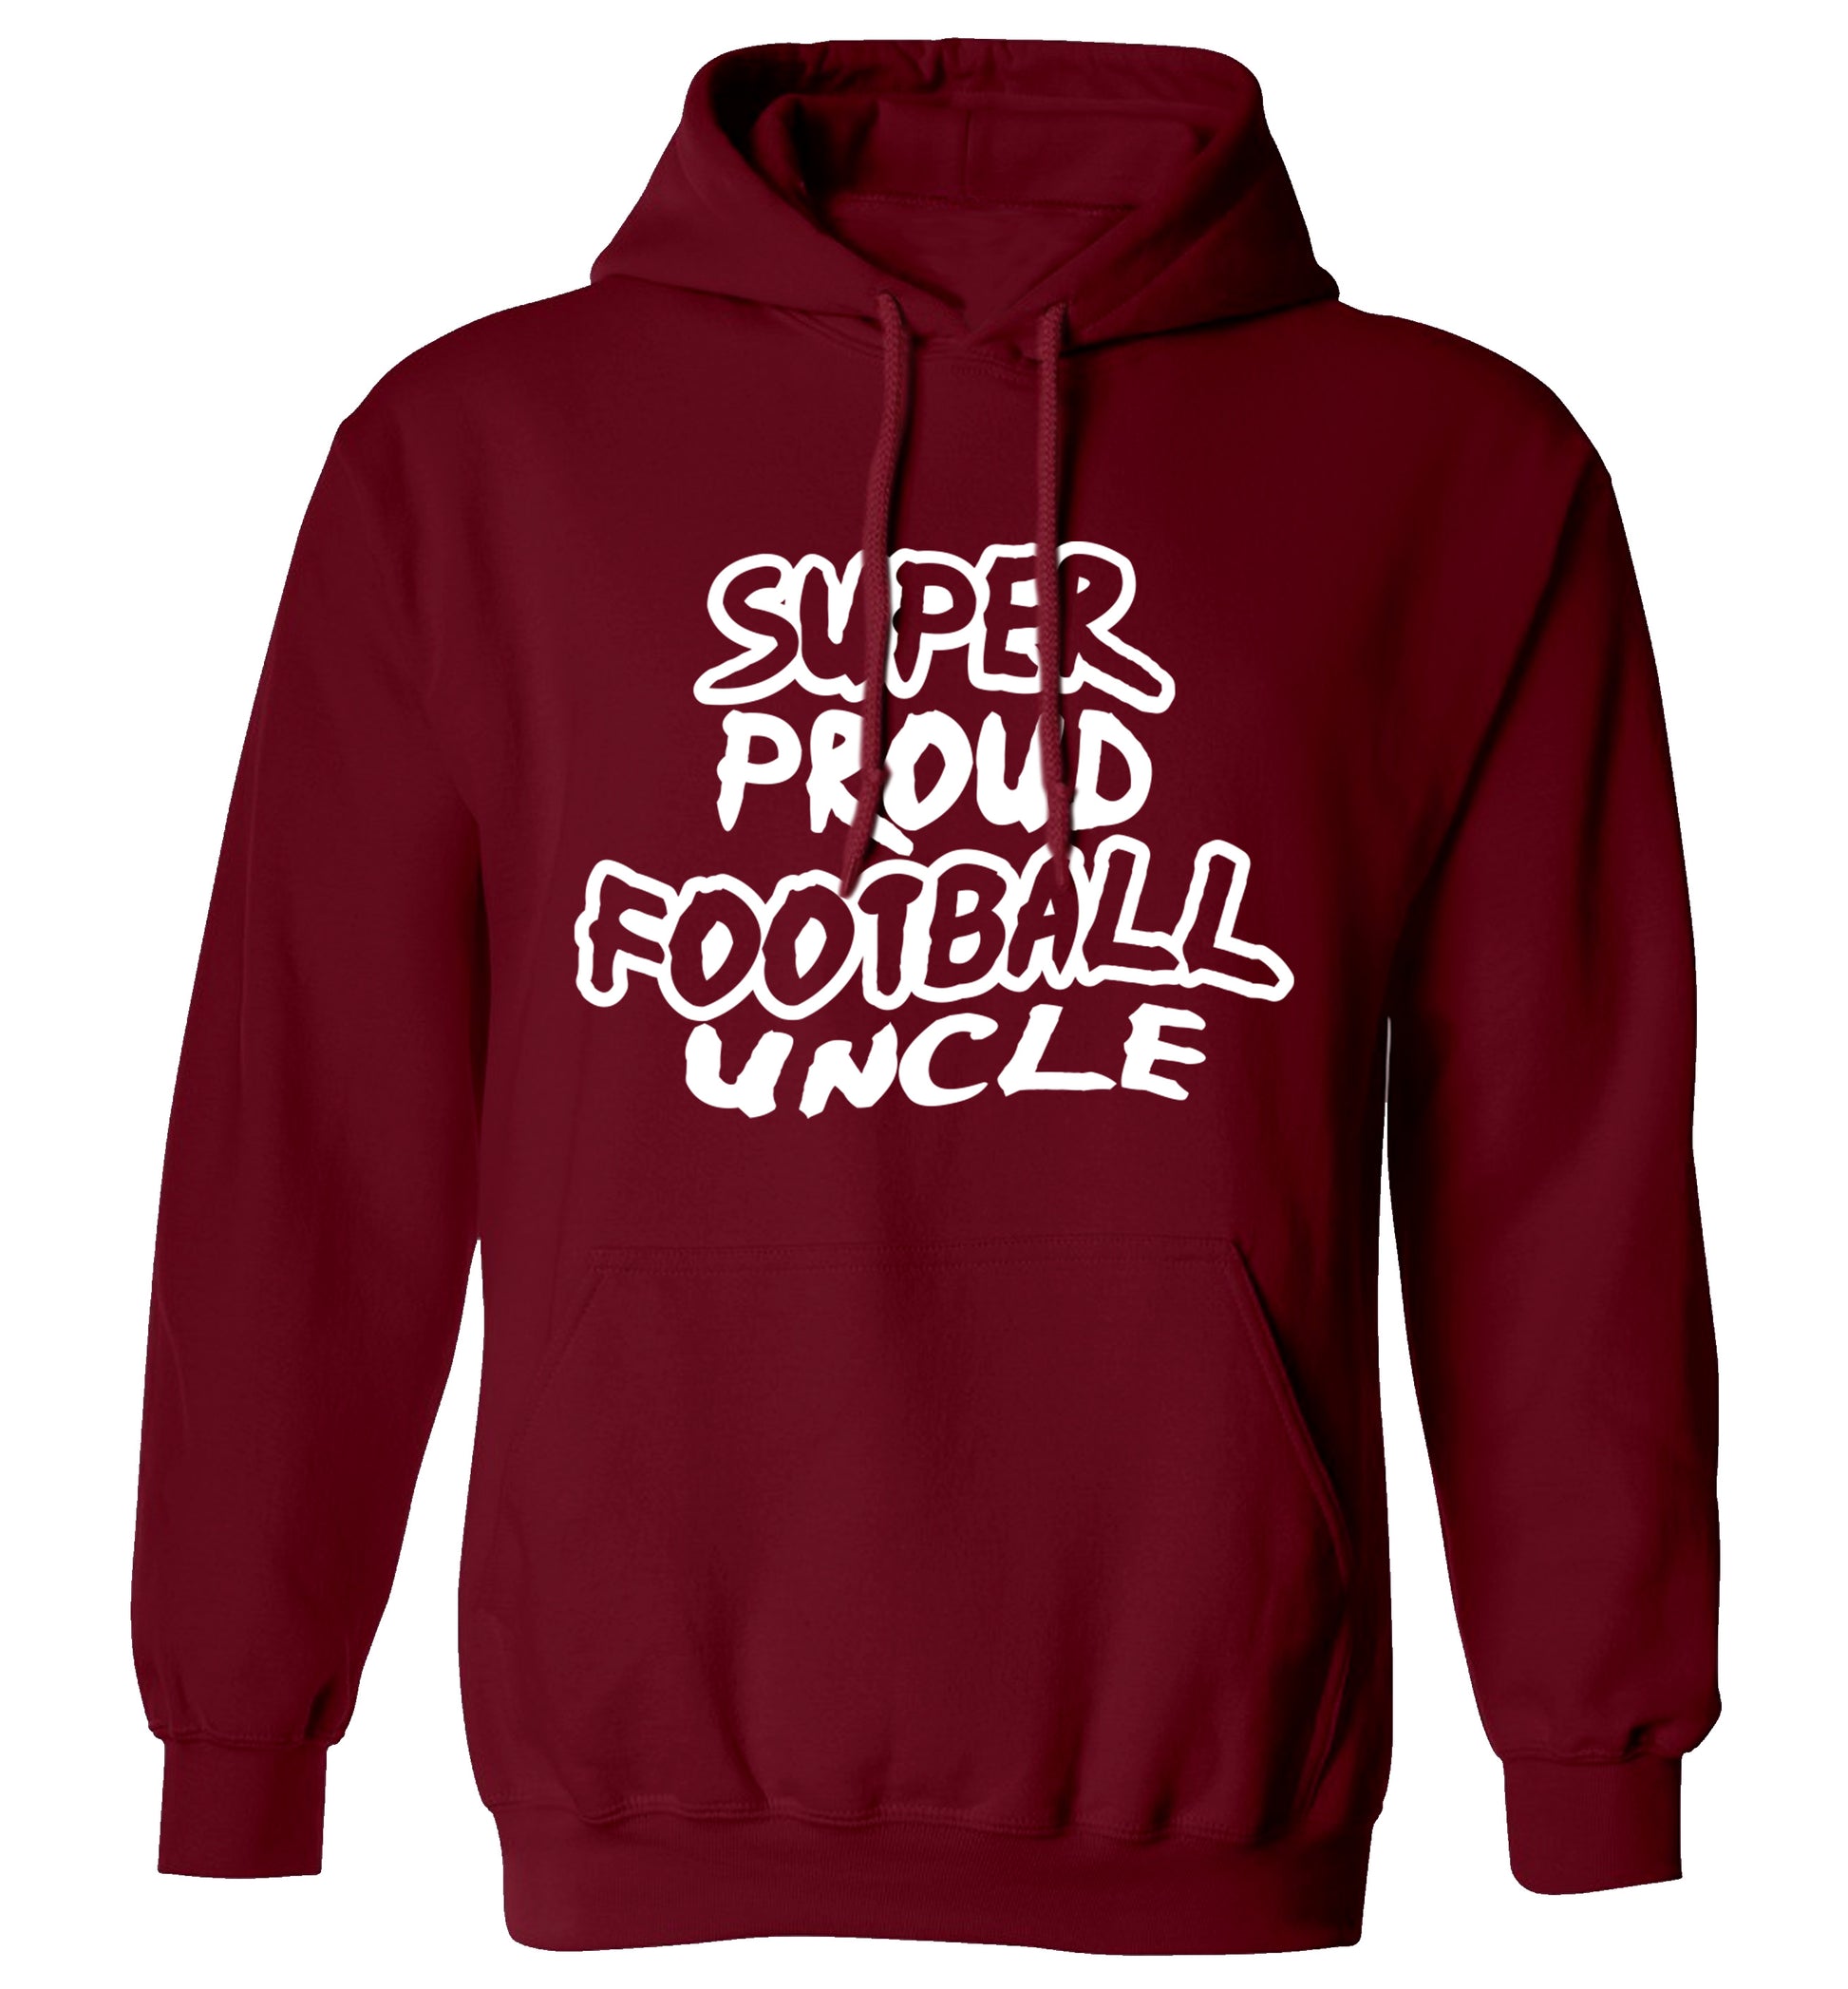 Super proud football uncle adults unisexmaroon hoodie 2XL